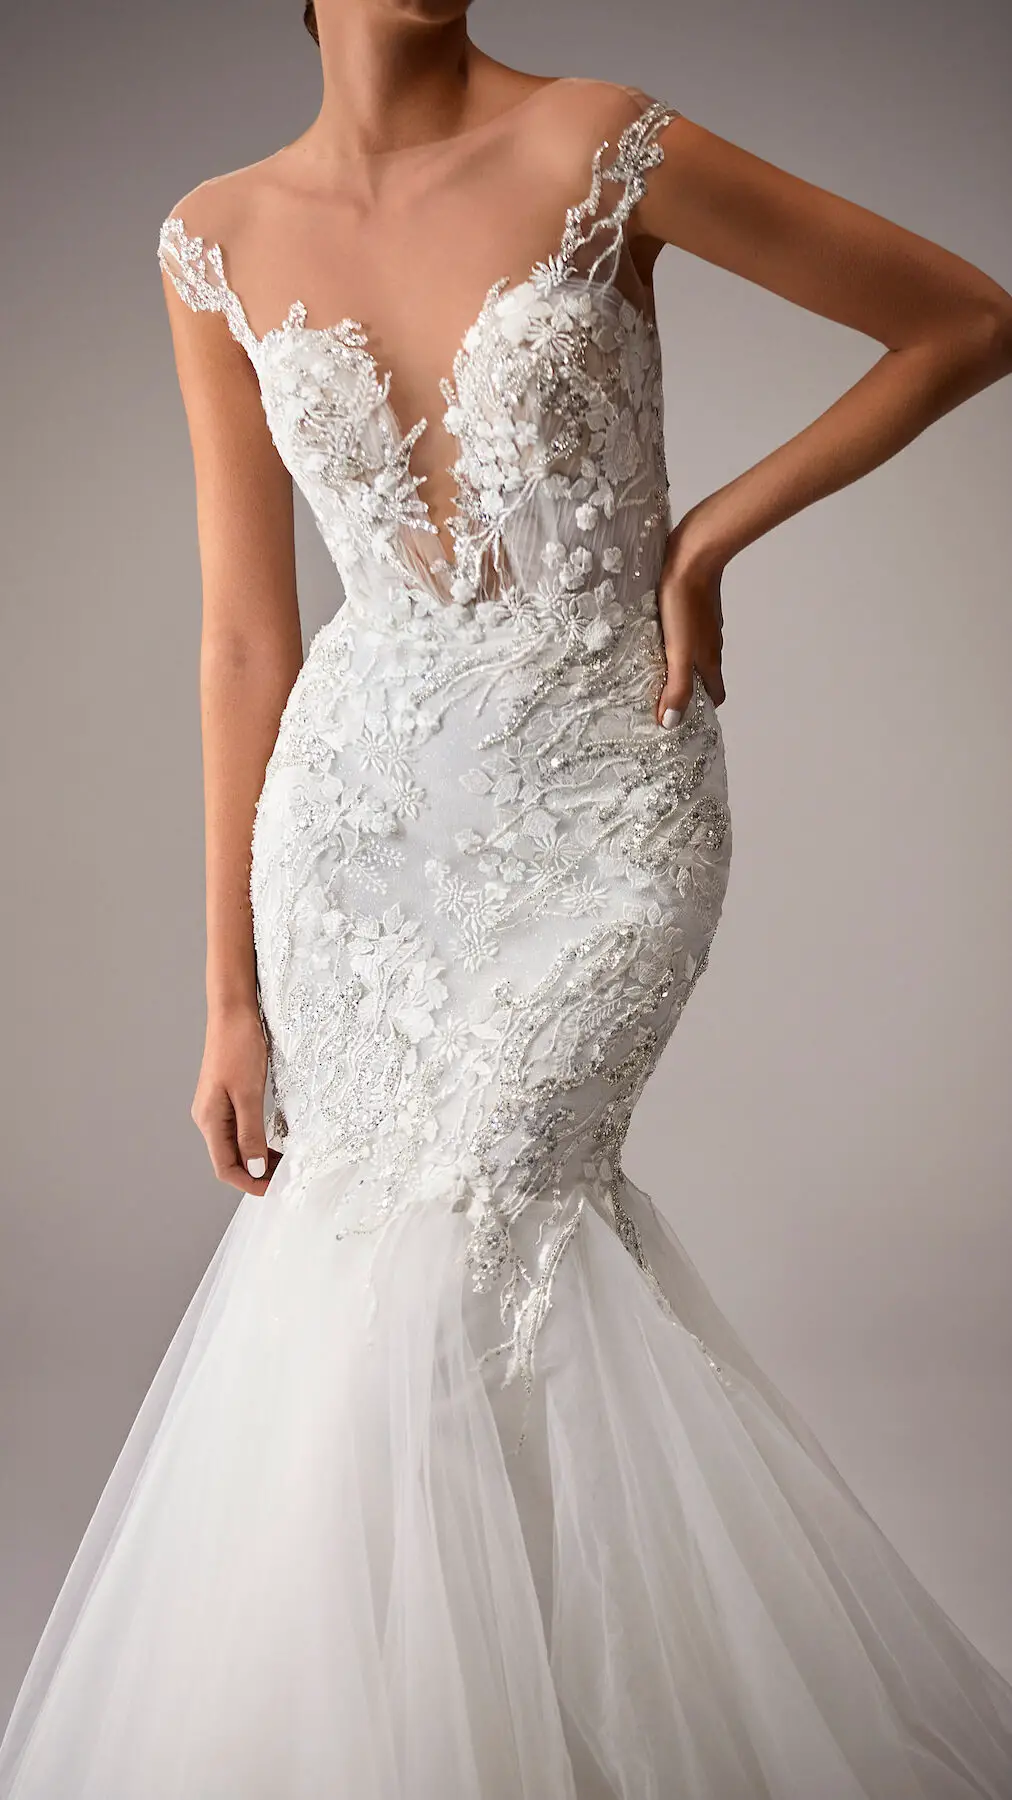 Lace mermaid Wedding Dress by Milla Nova - Adamma White Lace